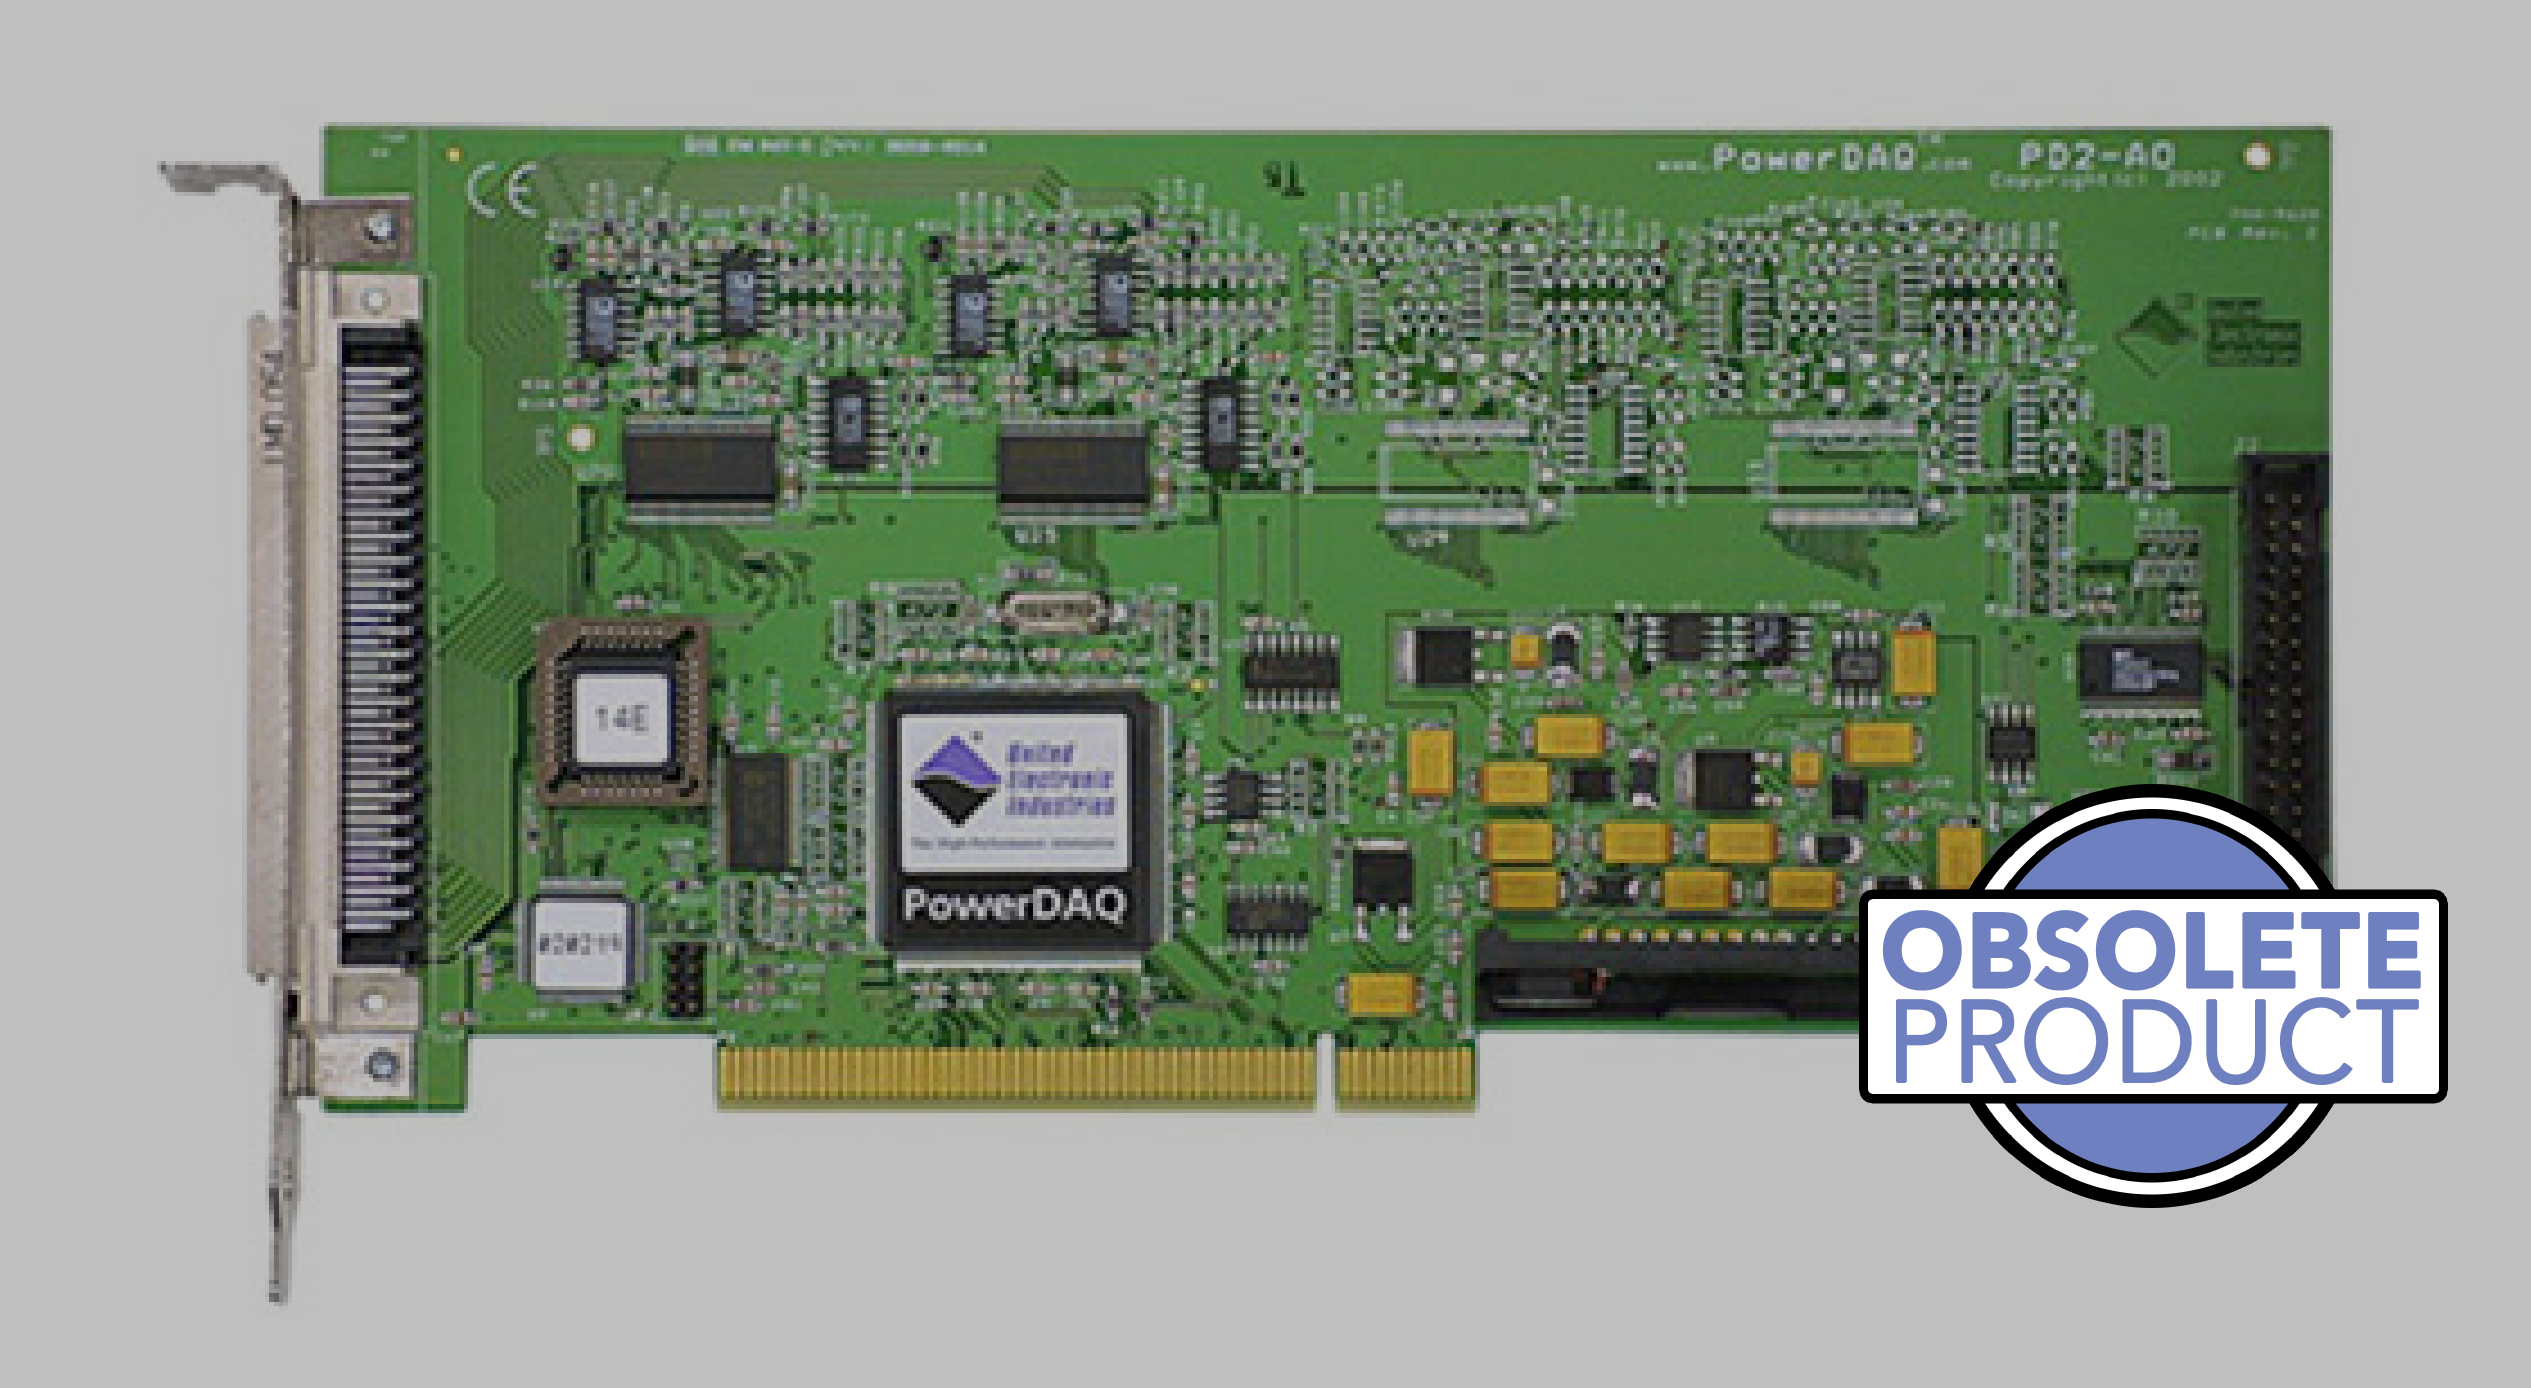 8-channel, 16-bit, 100 kS/s per channel PCI analog output board